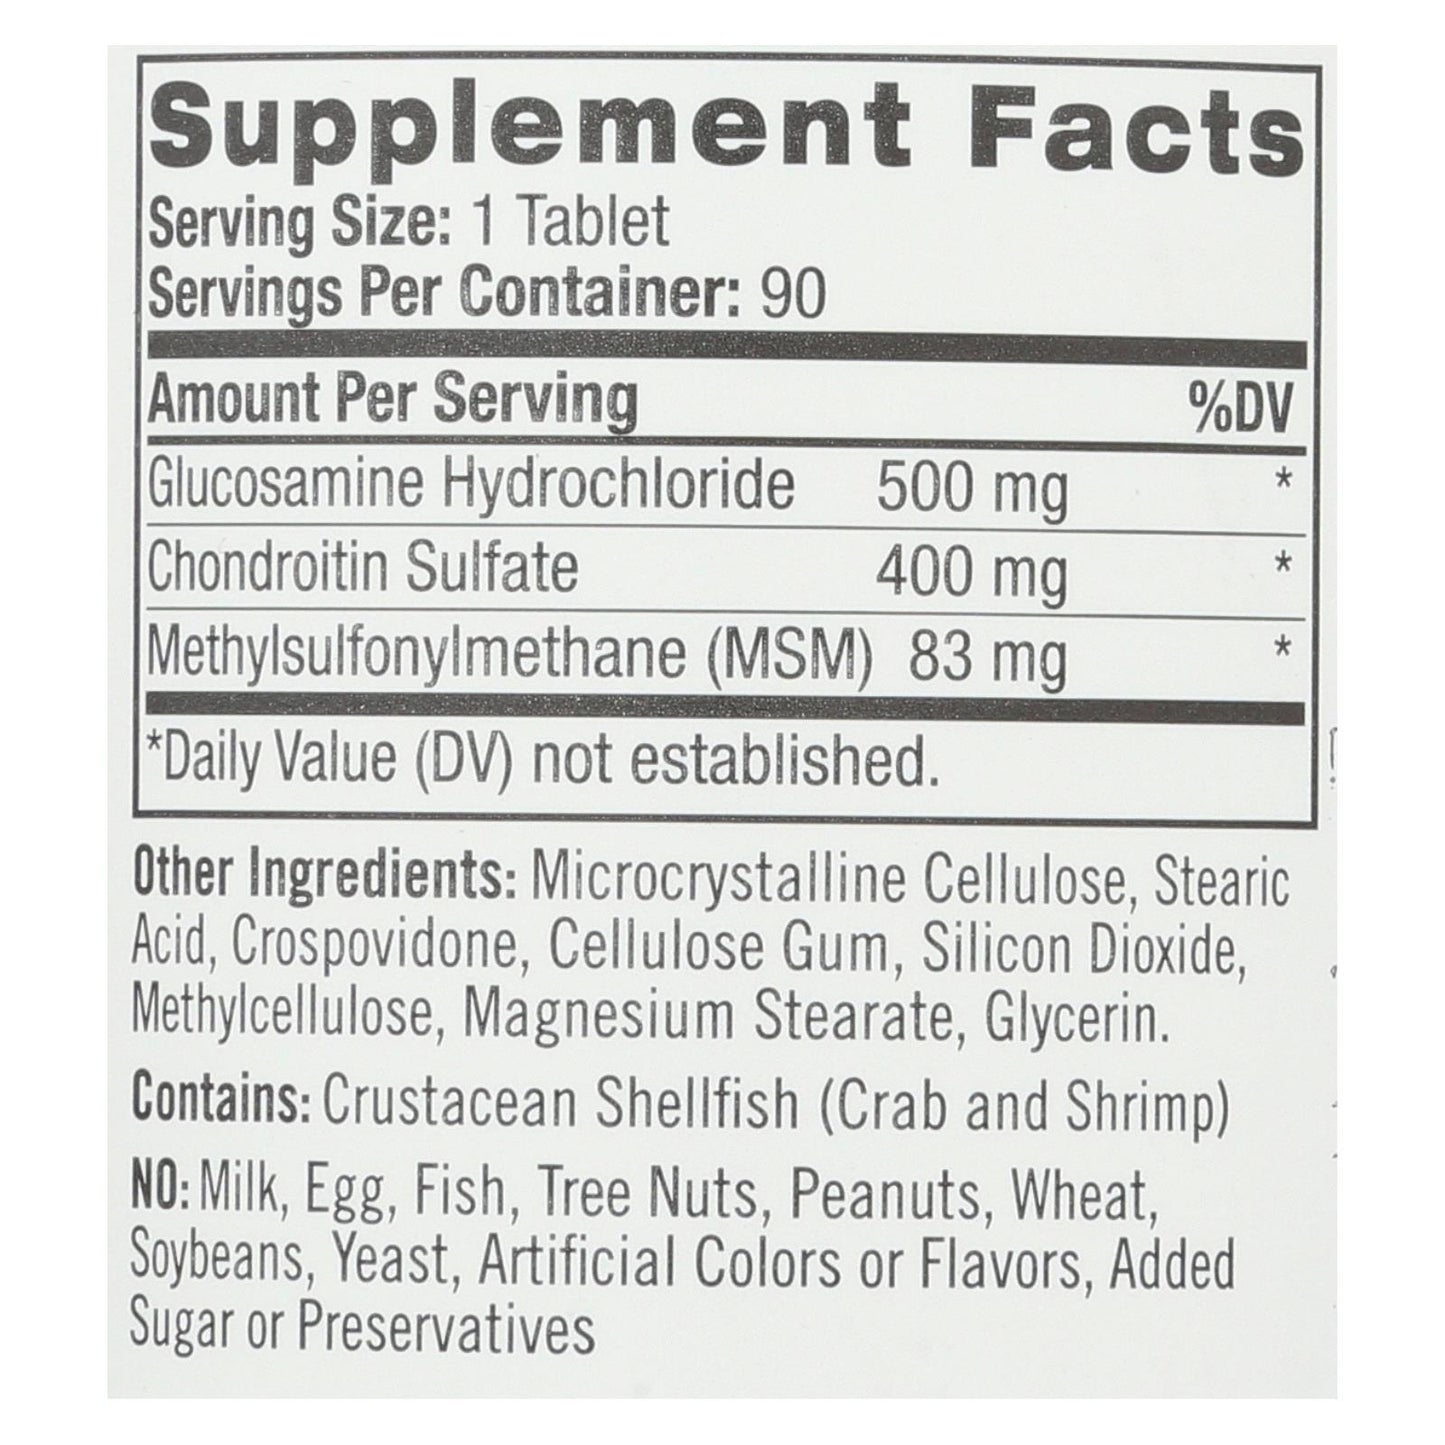 
                  
                    Natrol Glucosamine Chondroitin And Msm - 90 Tablets
                  
                